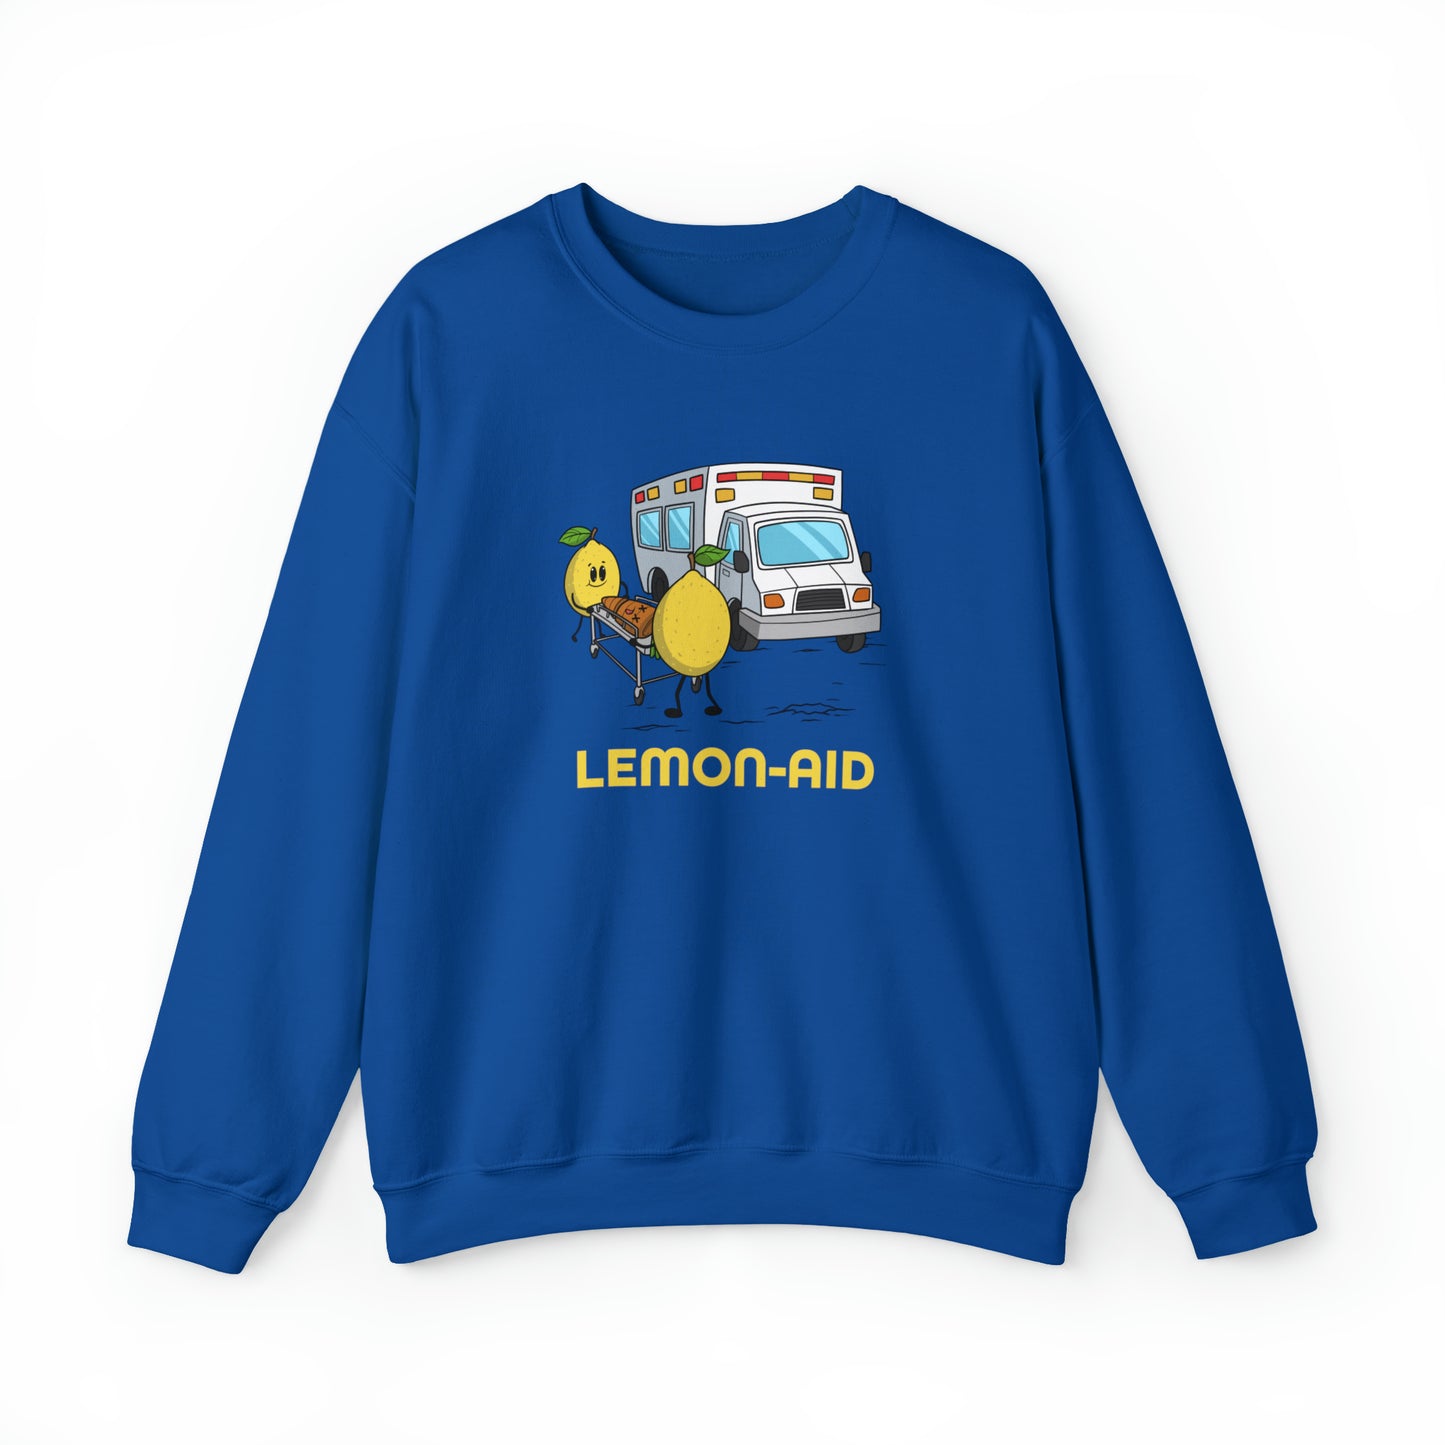 Custom Parody Crewneck Sweatshirt, Lemon-aid Design